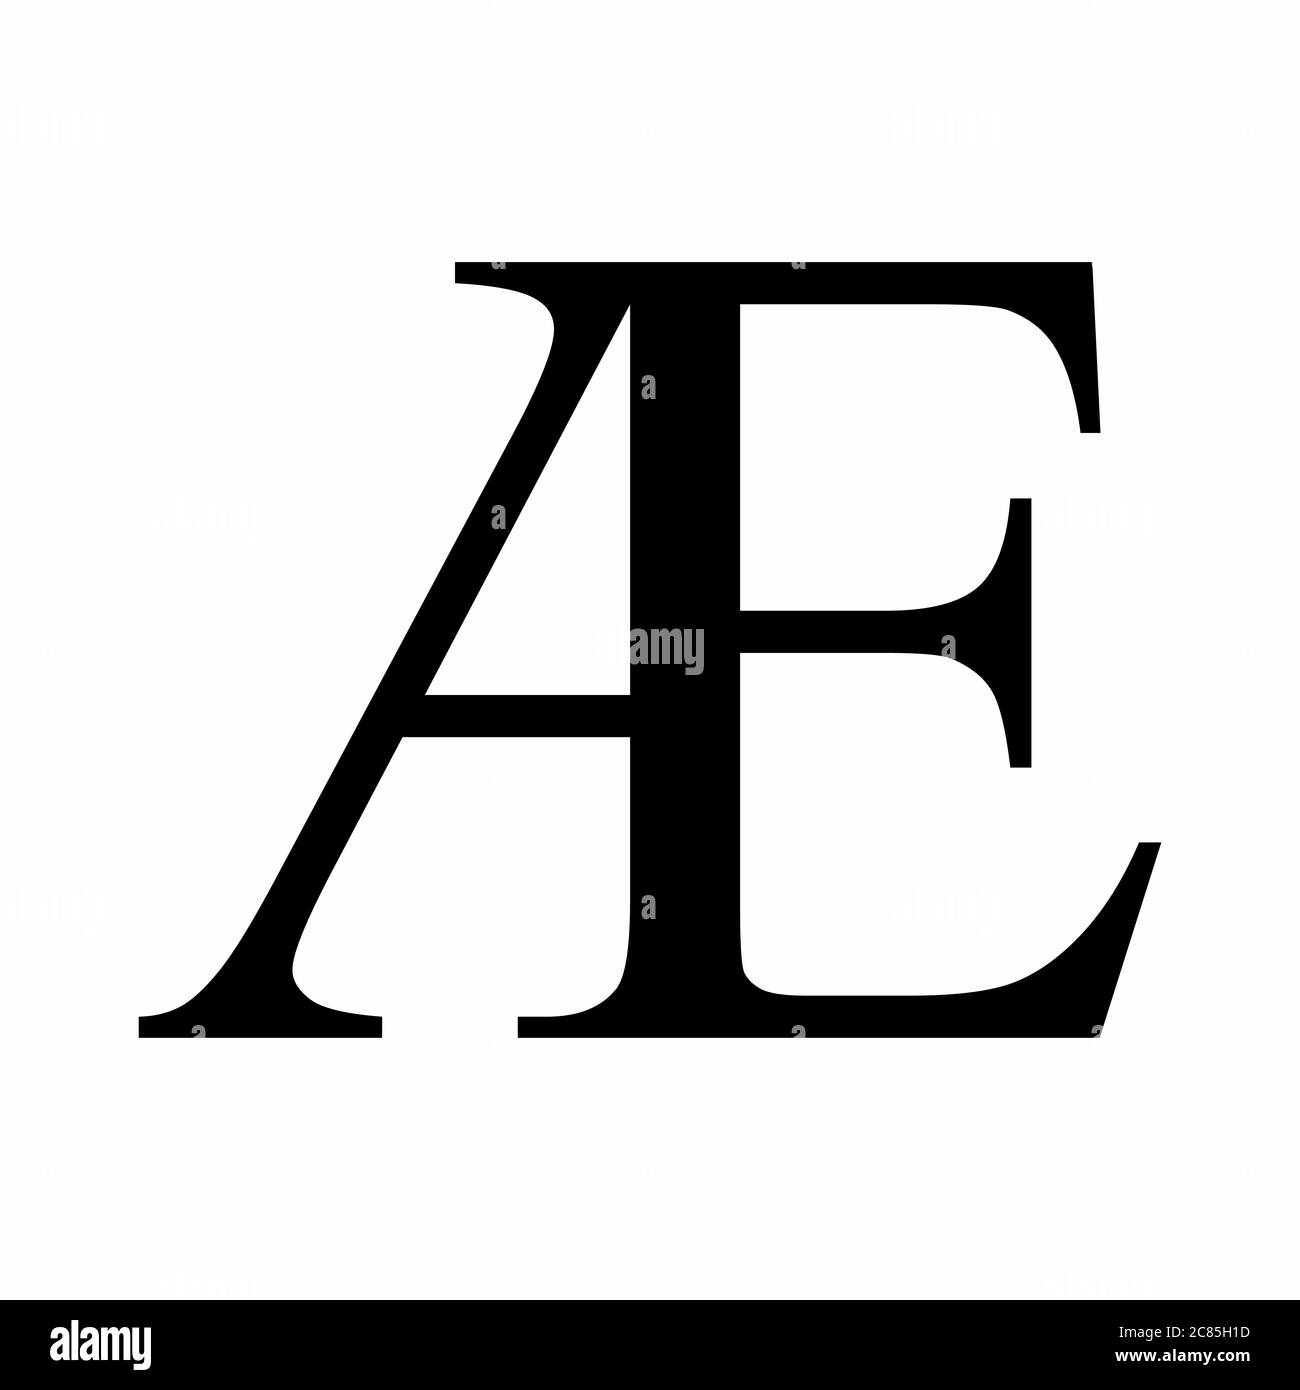 Ae ligature latin capital letter icon Stock Vector